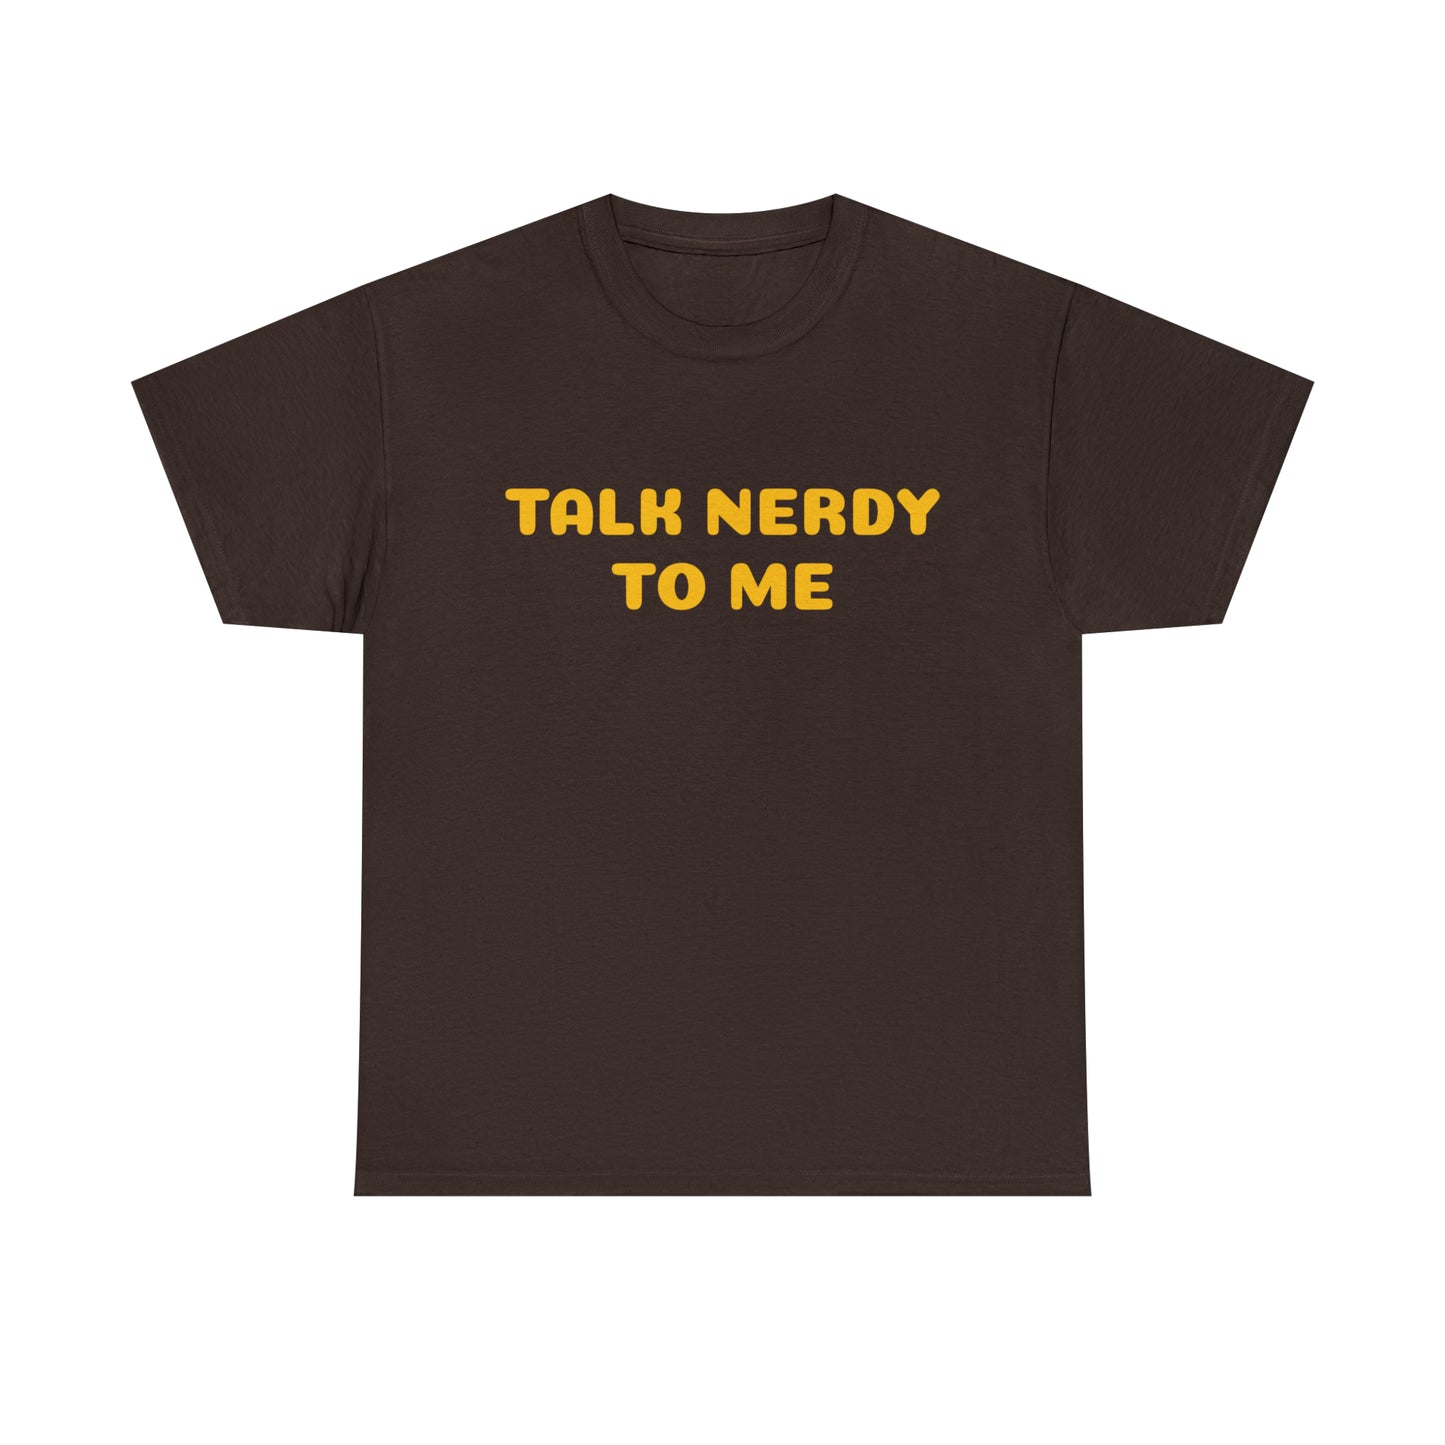 Custom Parody T-shirt, Talk nerdy to me shirt design